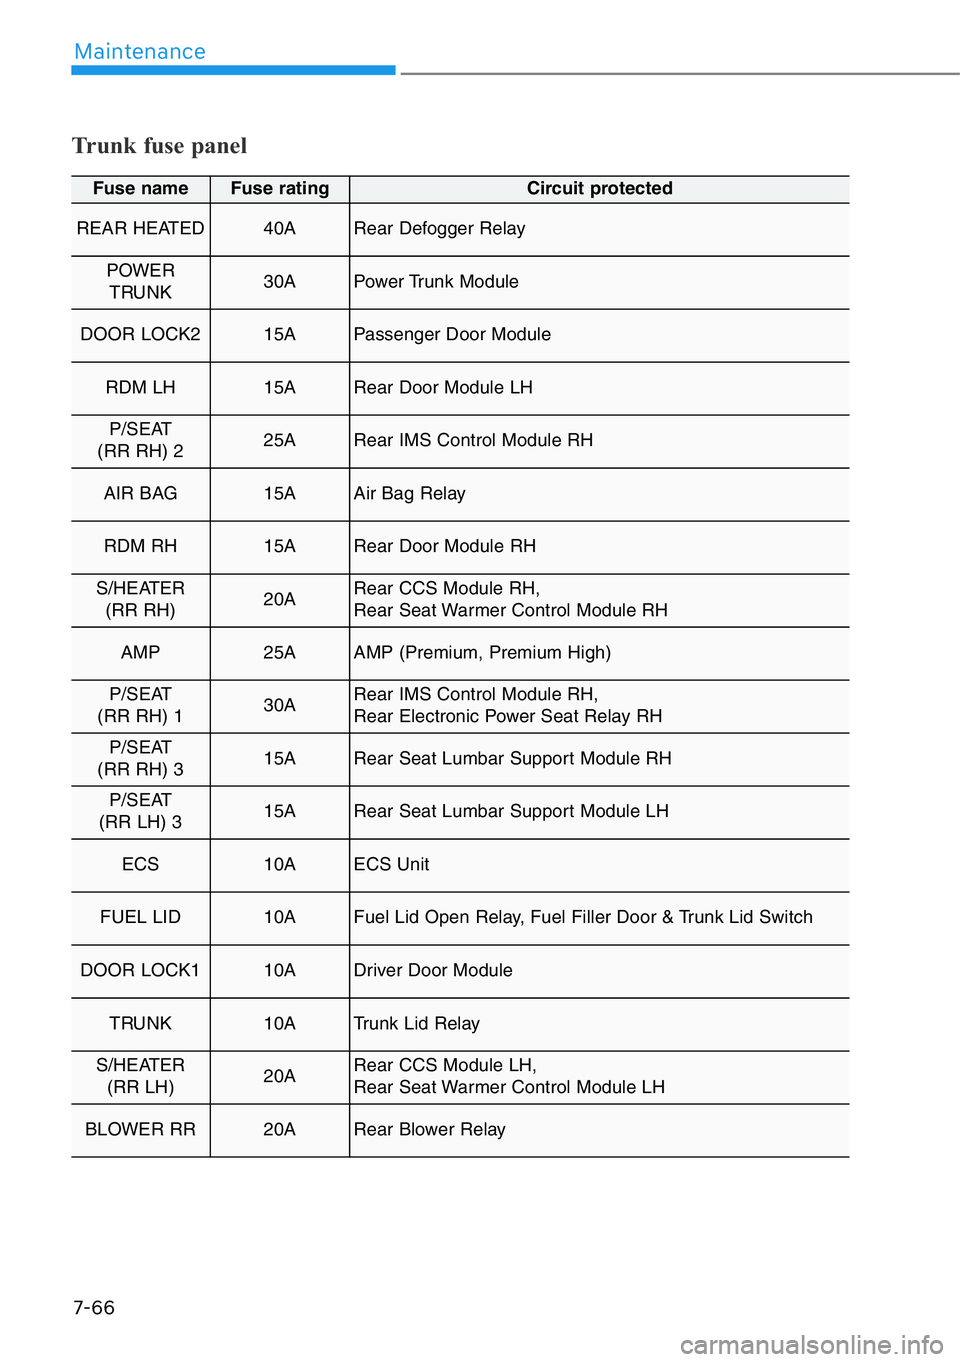 HYUNDAI GENESIS G90 2017  Owners Manual 7-66
Maintenance
Trunk fuse panel
Fuse name Fuse rating Circuit protected
REAR HEATED40A Rear Defogger Relay 
POWER
TRUNK30A Power Trunk Module 
DOOR LOCK215A Passenger Door Module 
RDM LH15A Rear Doo